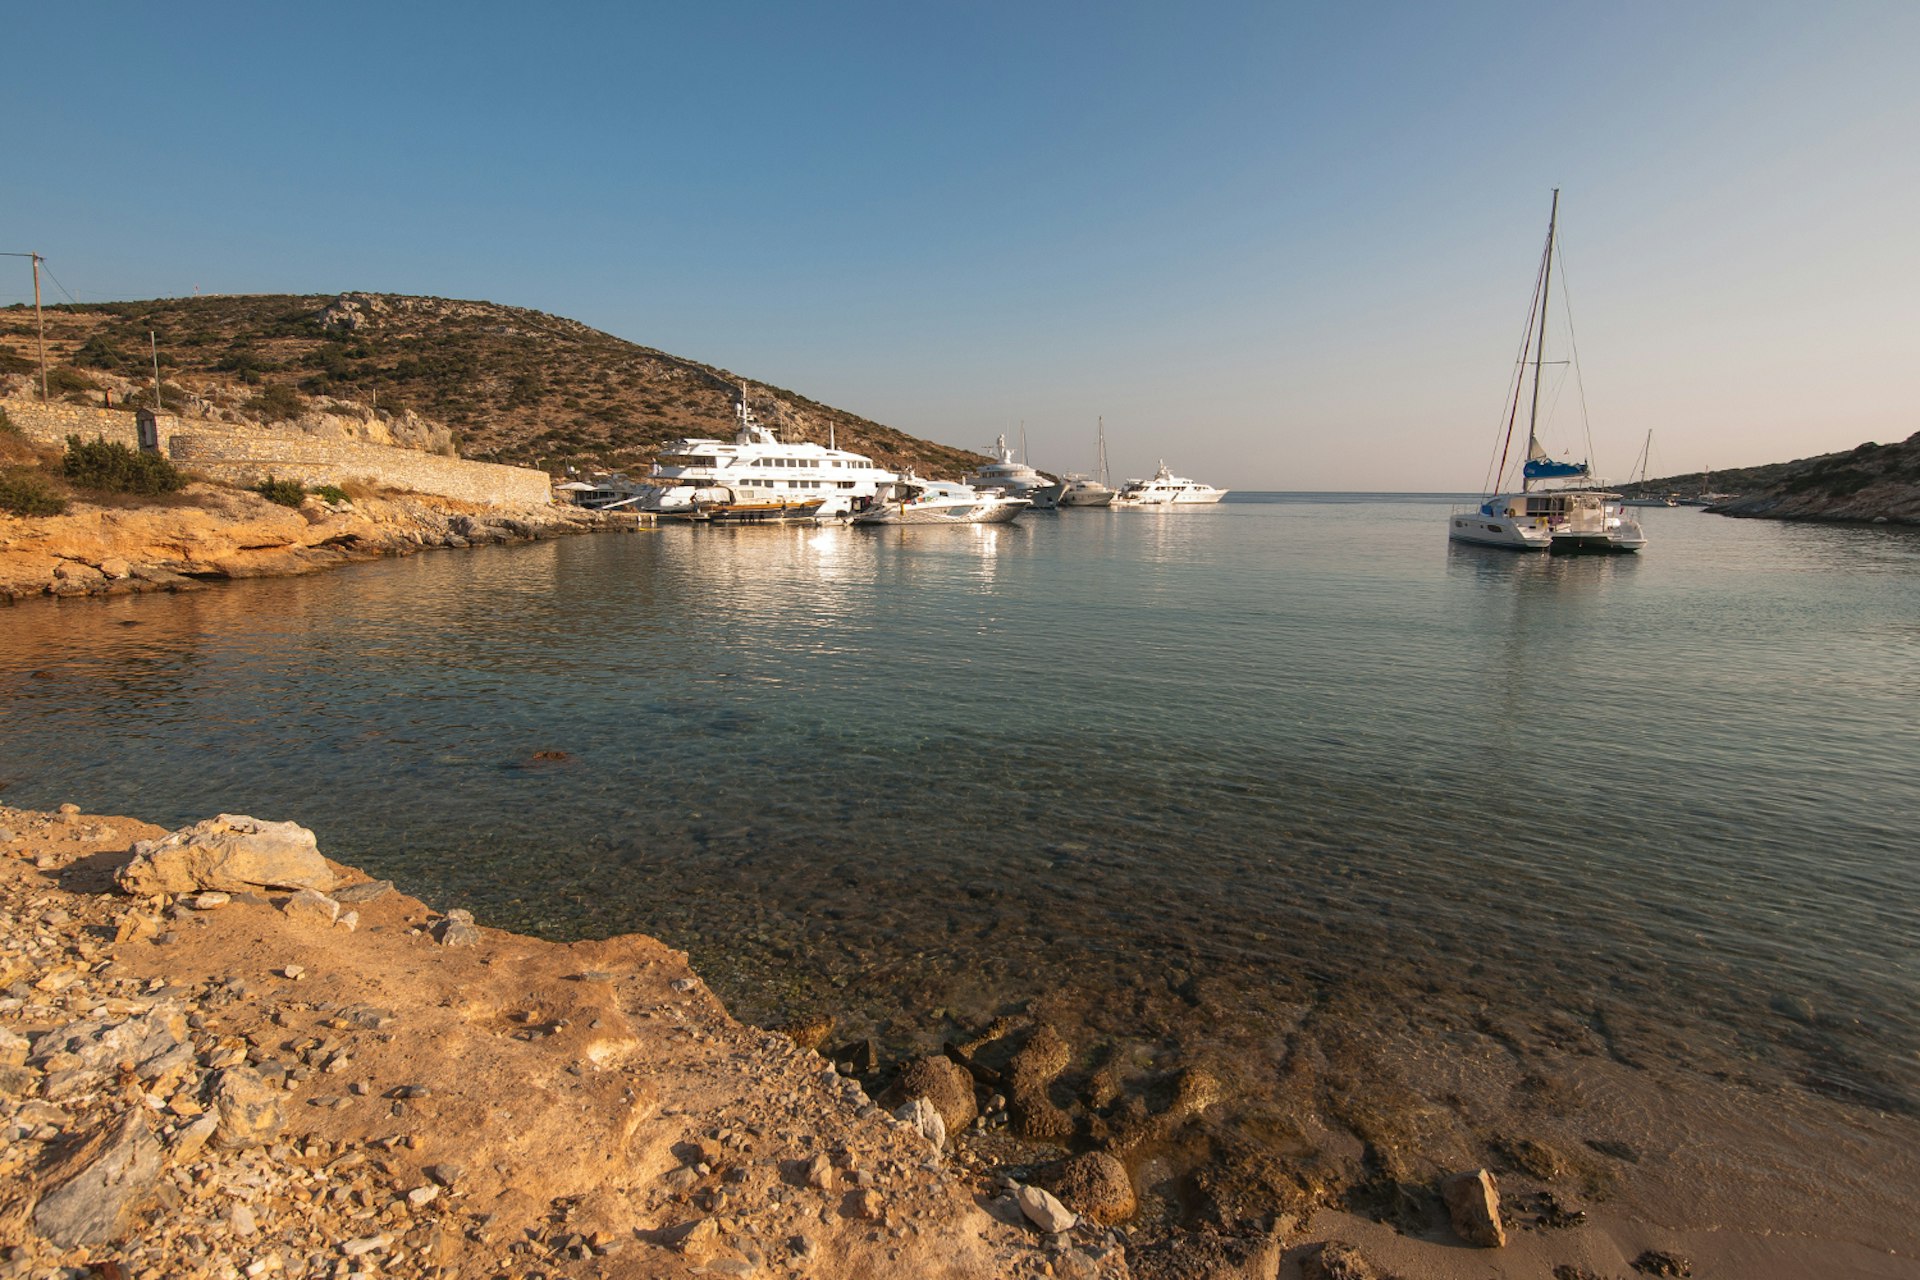 Sailing boats docked in a quiet bay at Schinousa island © Dimitrios Koralis / Shutterstock